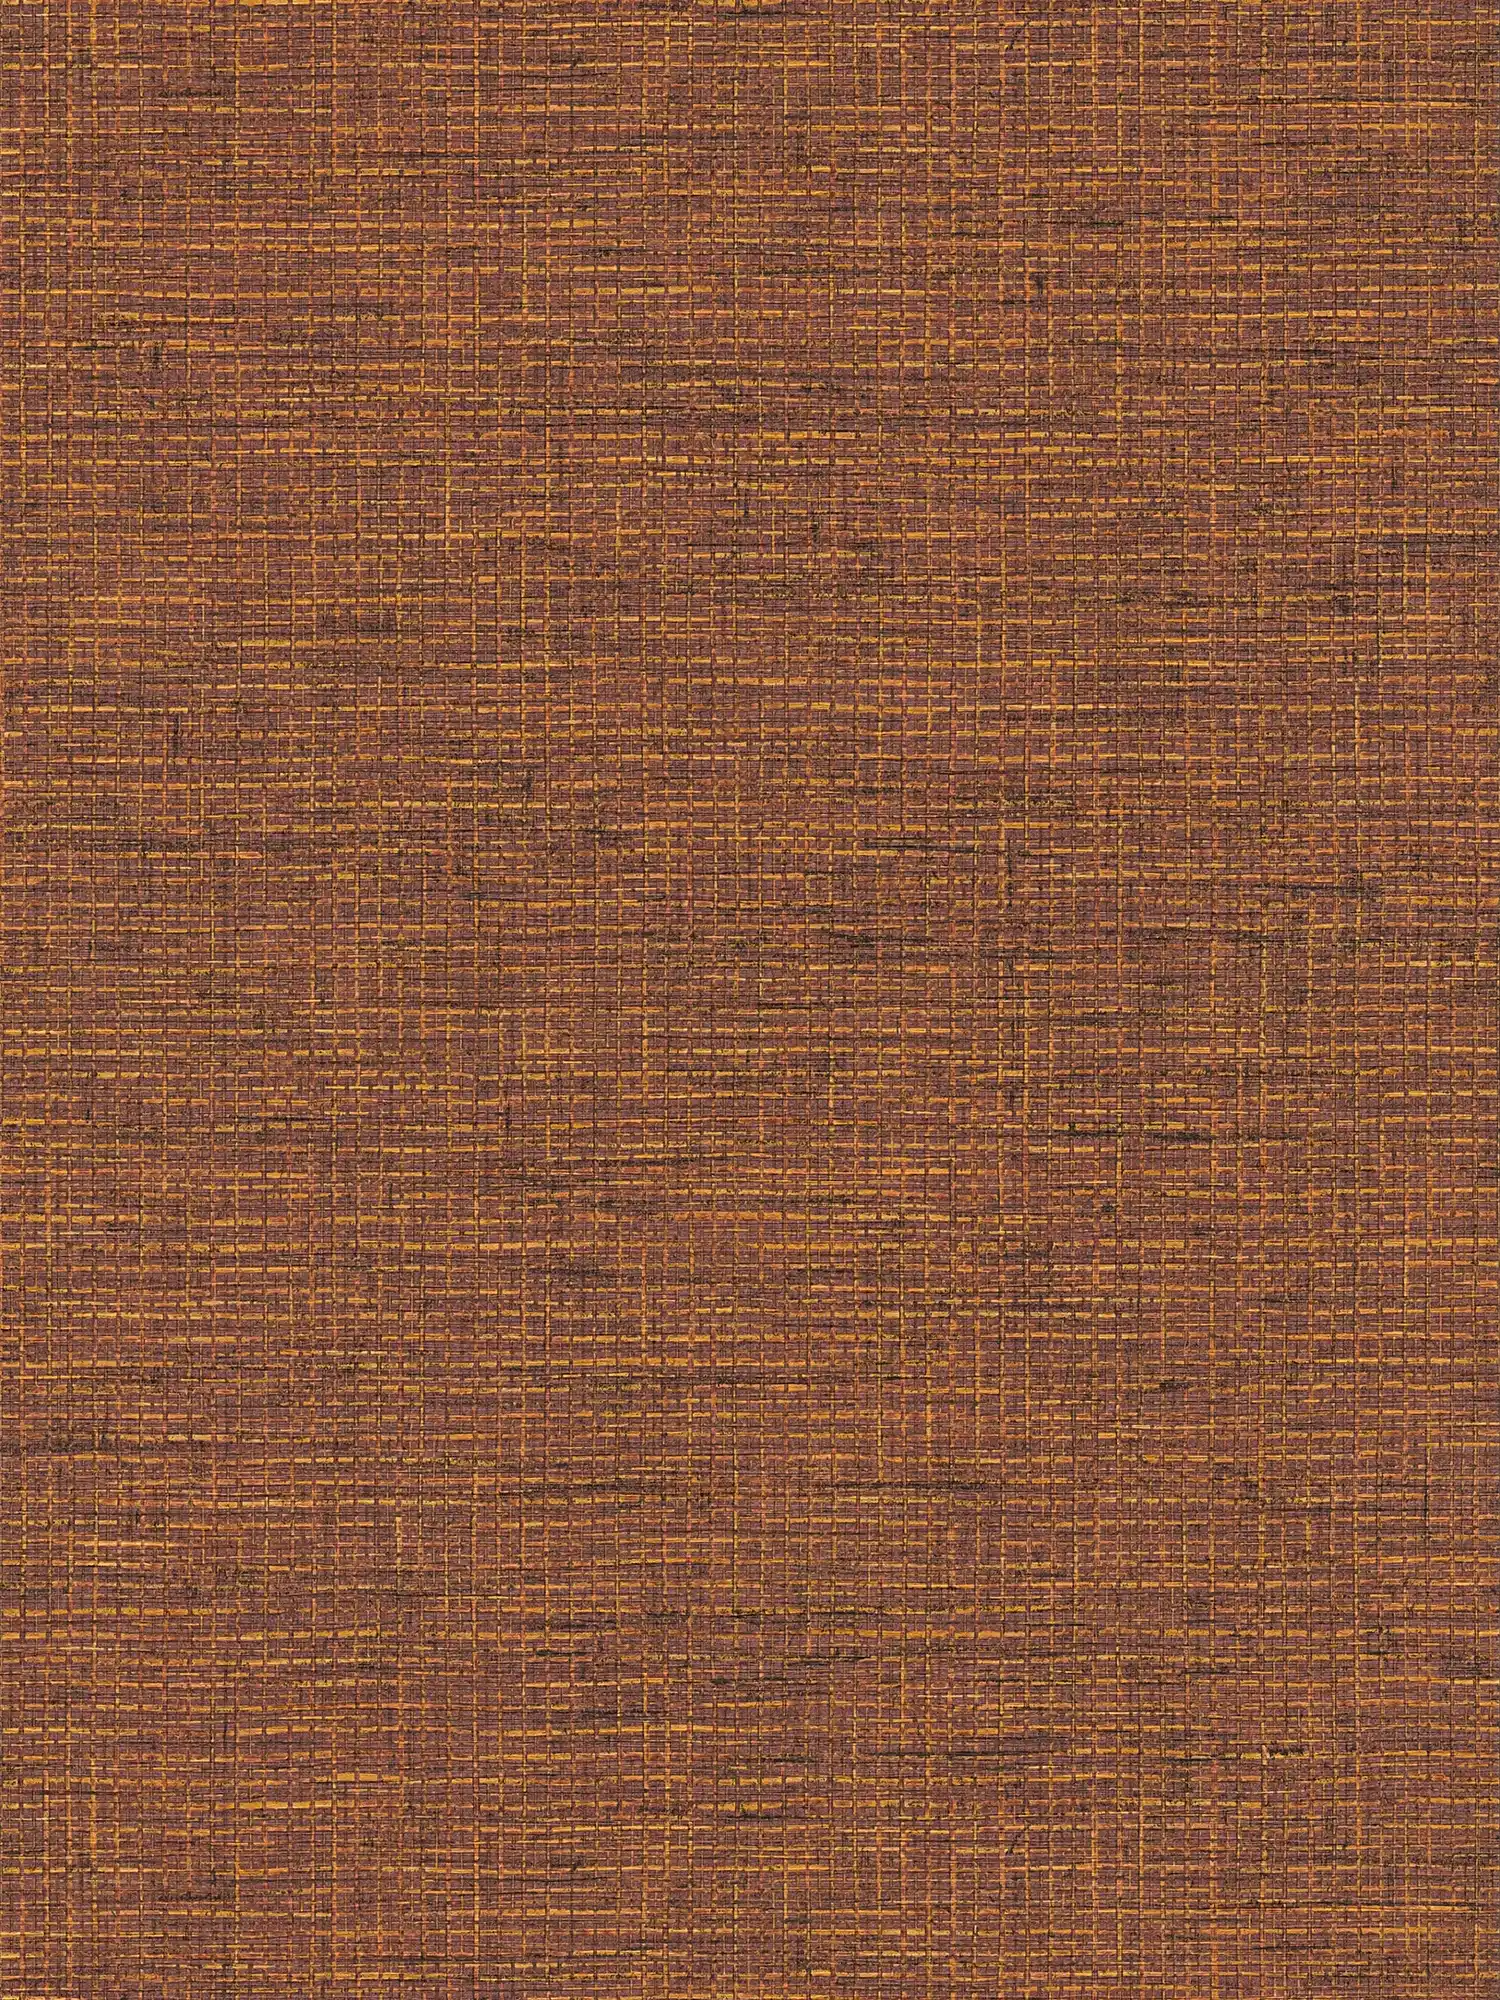 Ethno wallpaper orange-brown with raffia fabric look
